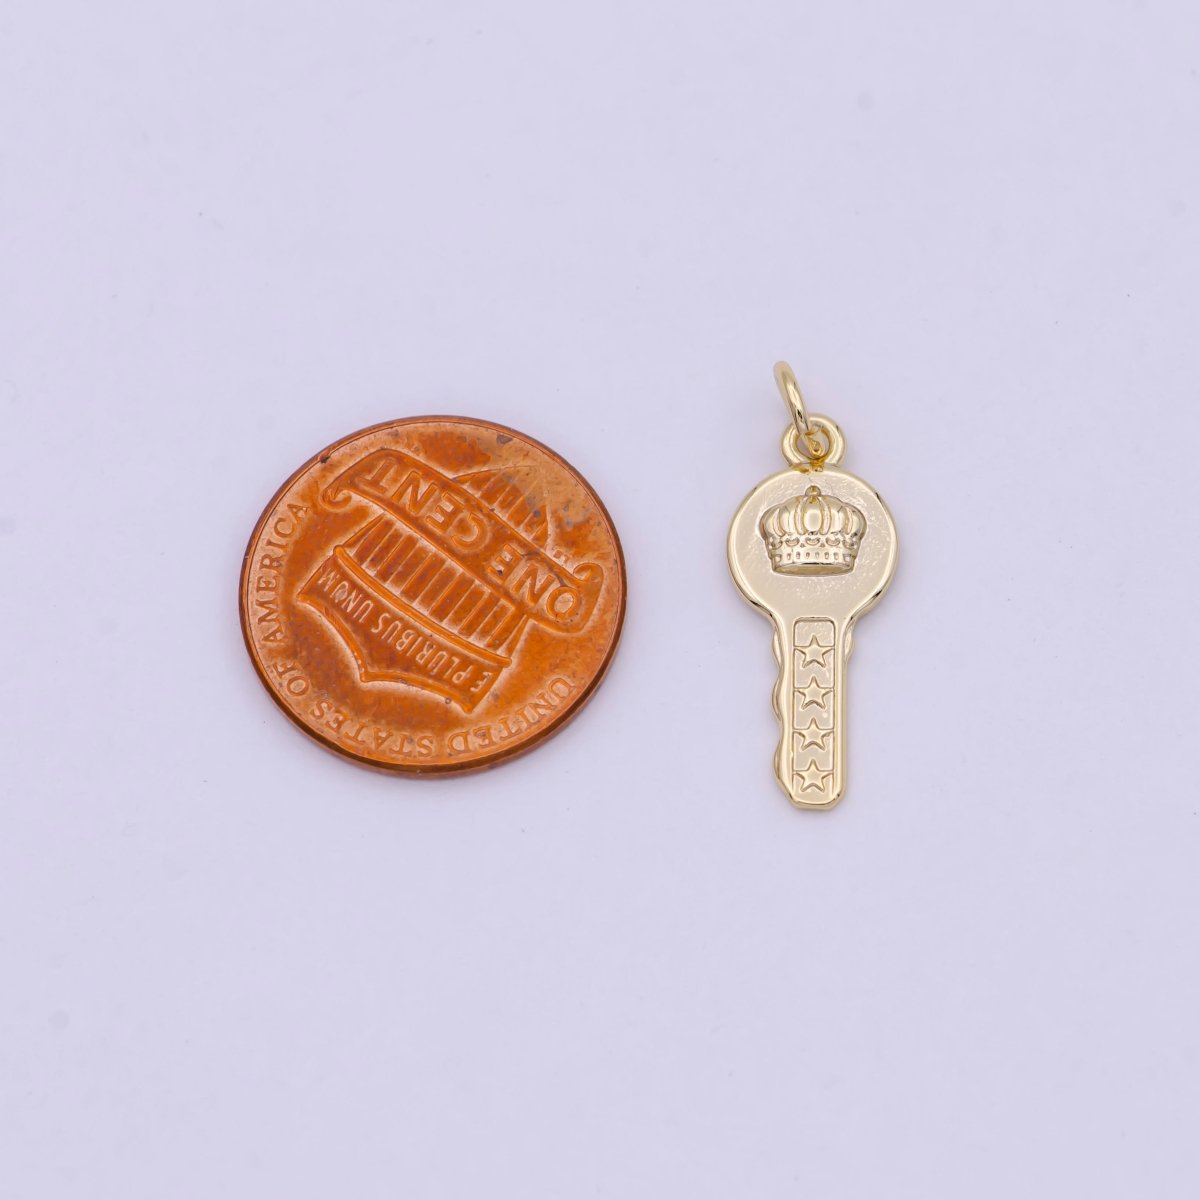 Mini Gold Key Charm with Crown Design N-365 - DLUXCA